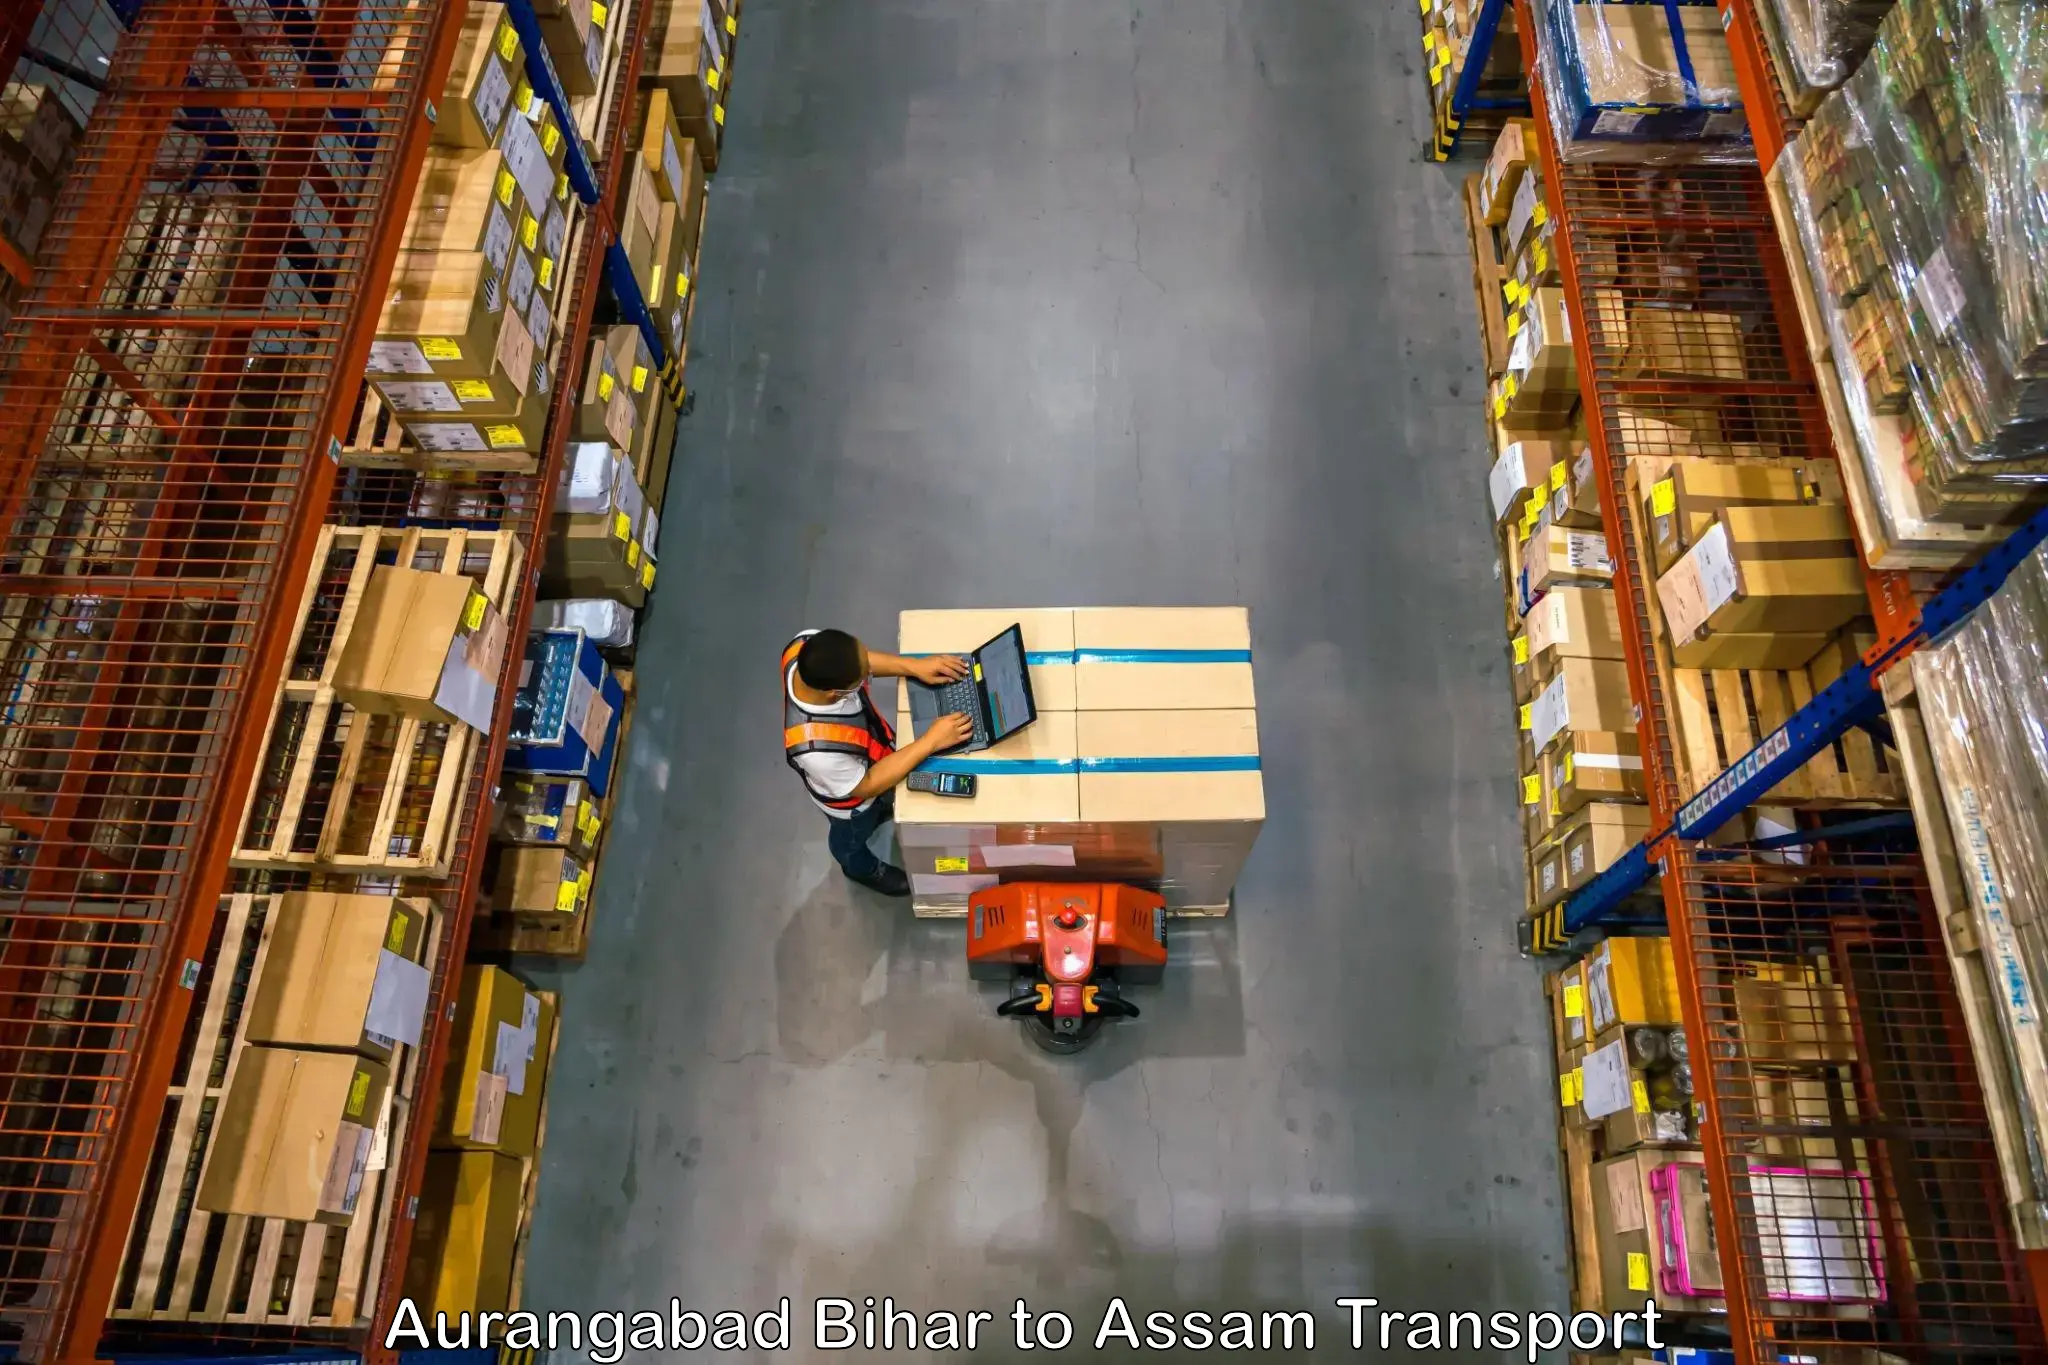 Lorry transport service in Aurangabad Bihar to Guwahati University